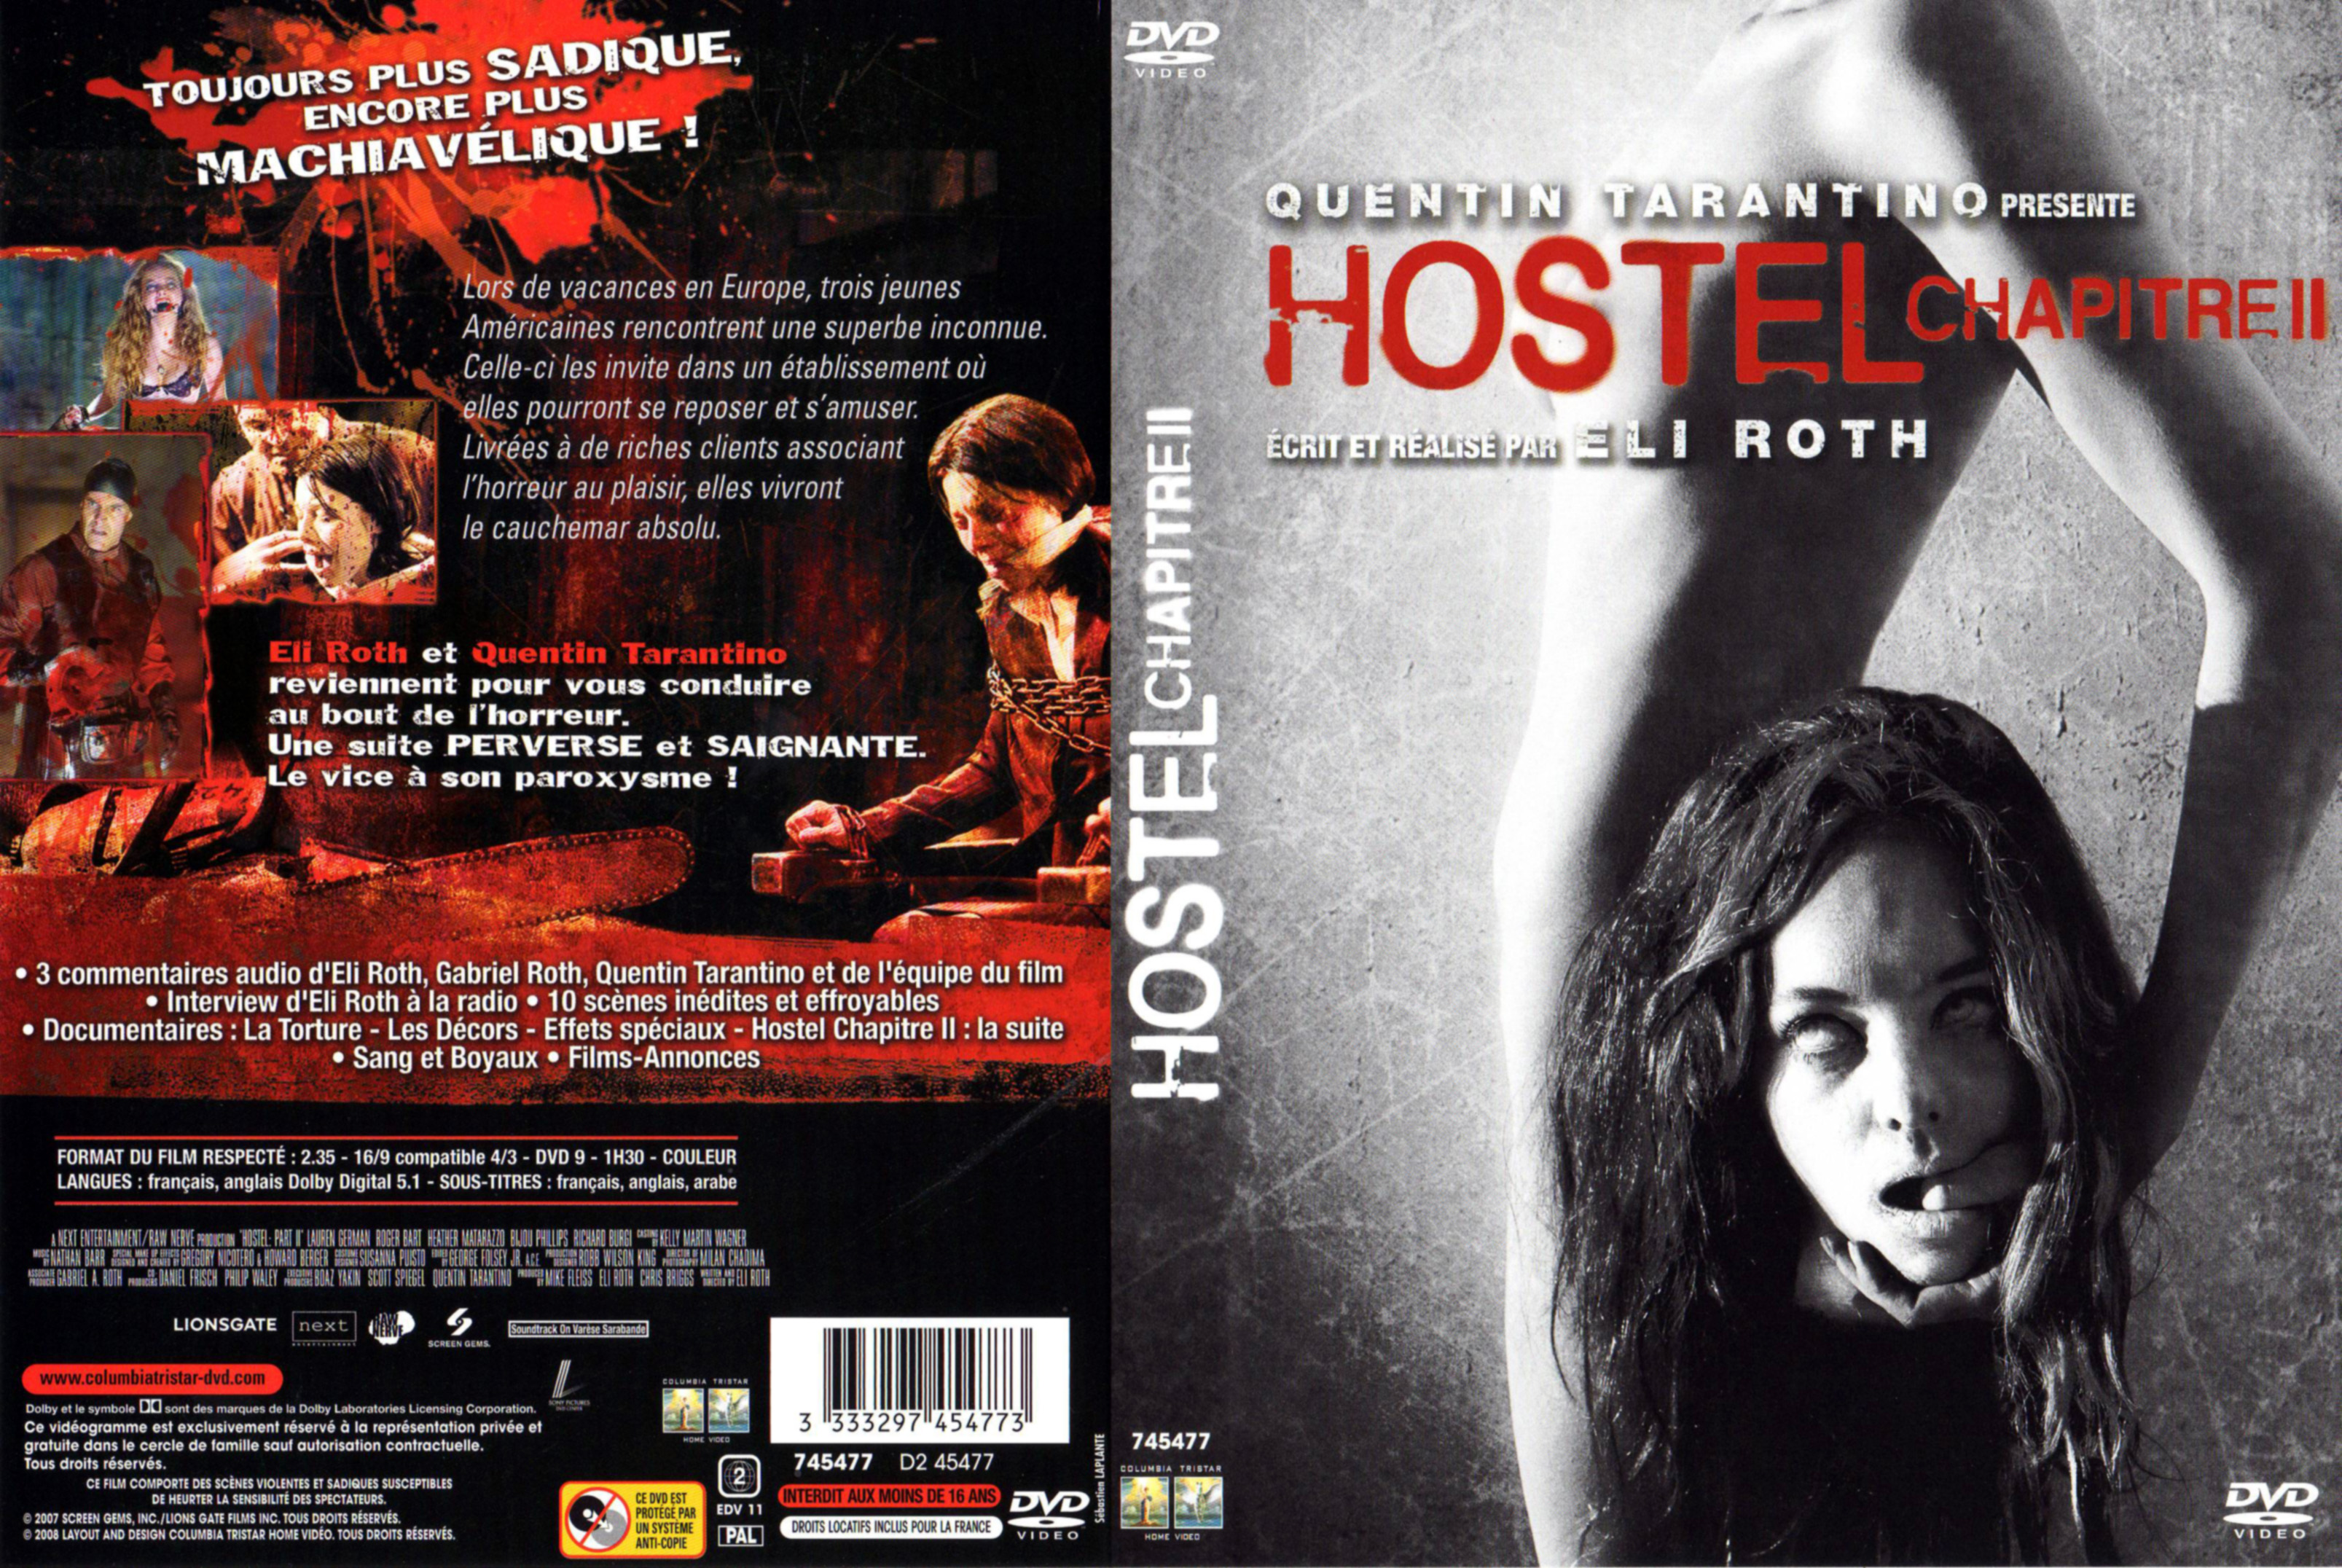 Jaquette DVD Hostel 2